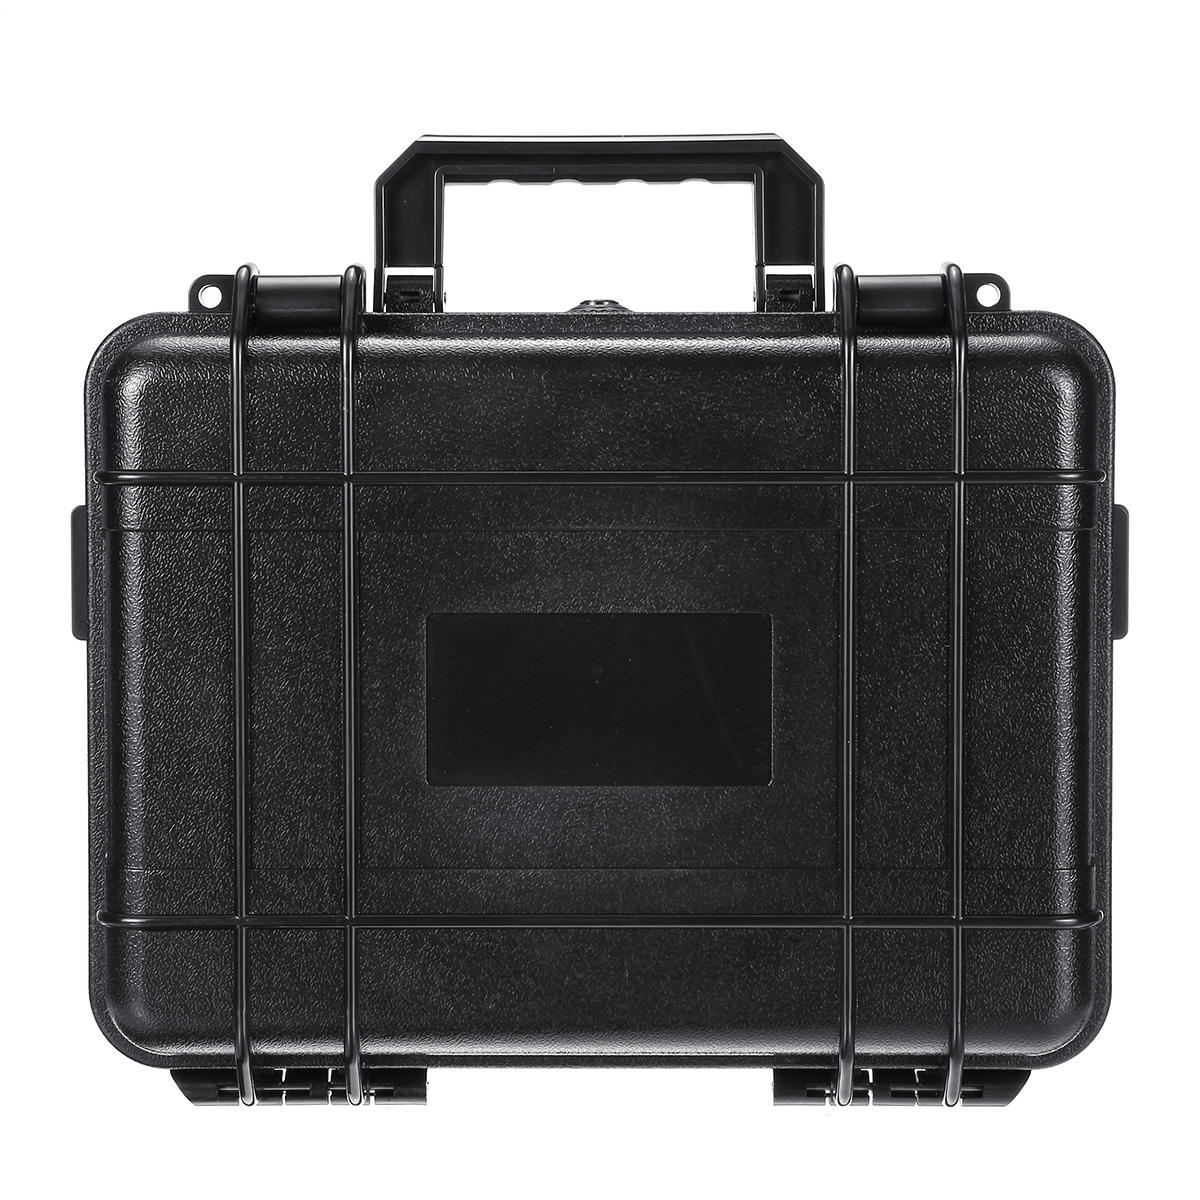 Outdoor Portable EDC Instrument Tool Kits Box Waterdicht Schokbestendig Beschermende veiligheid Opbe